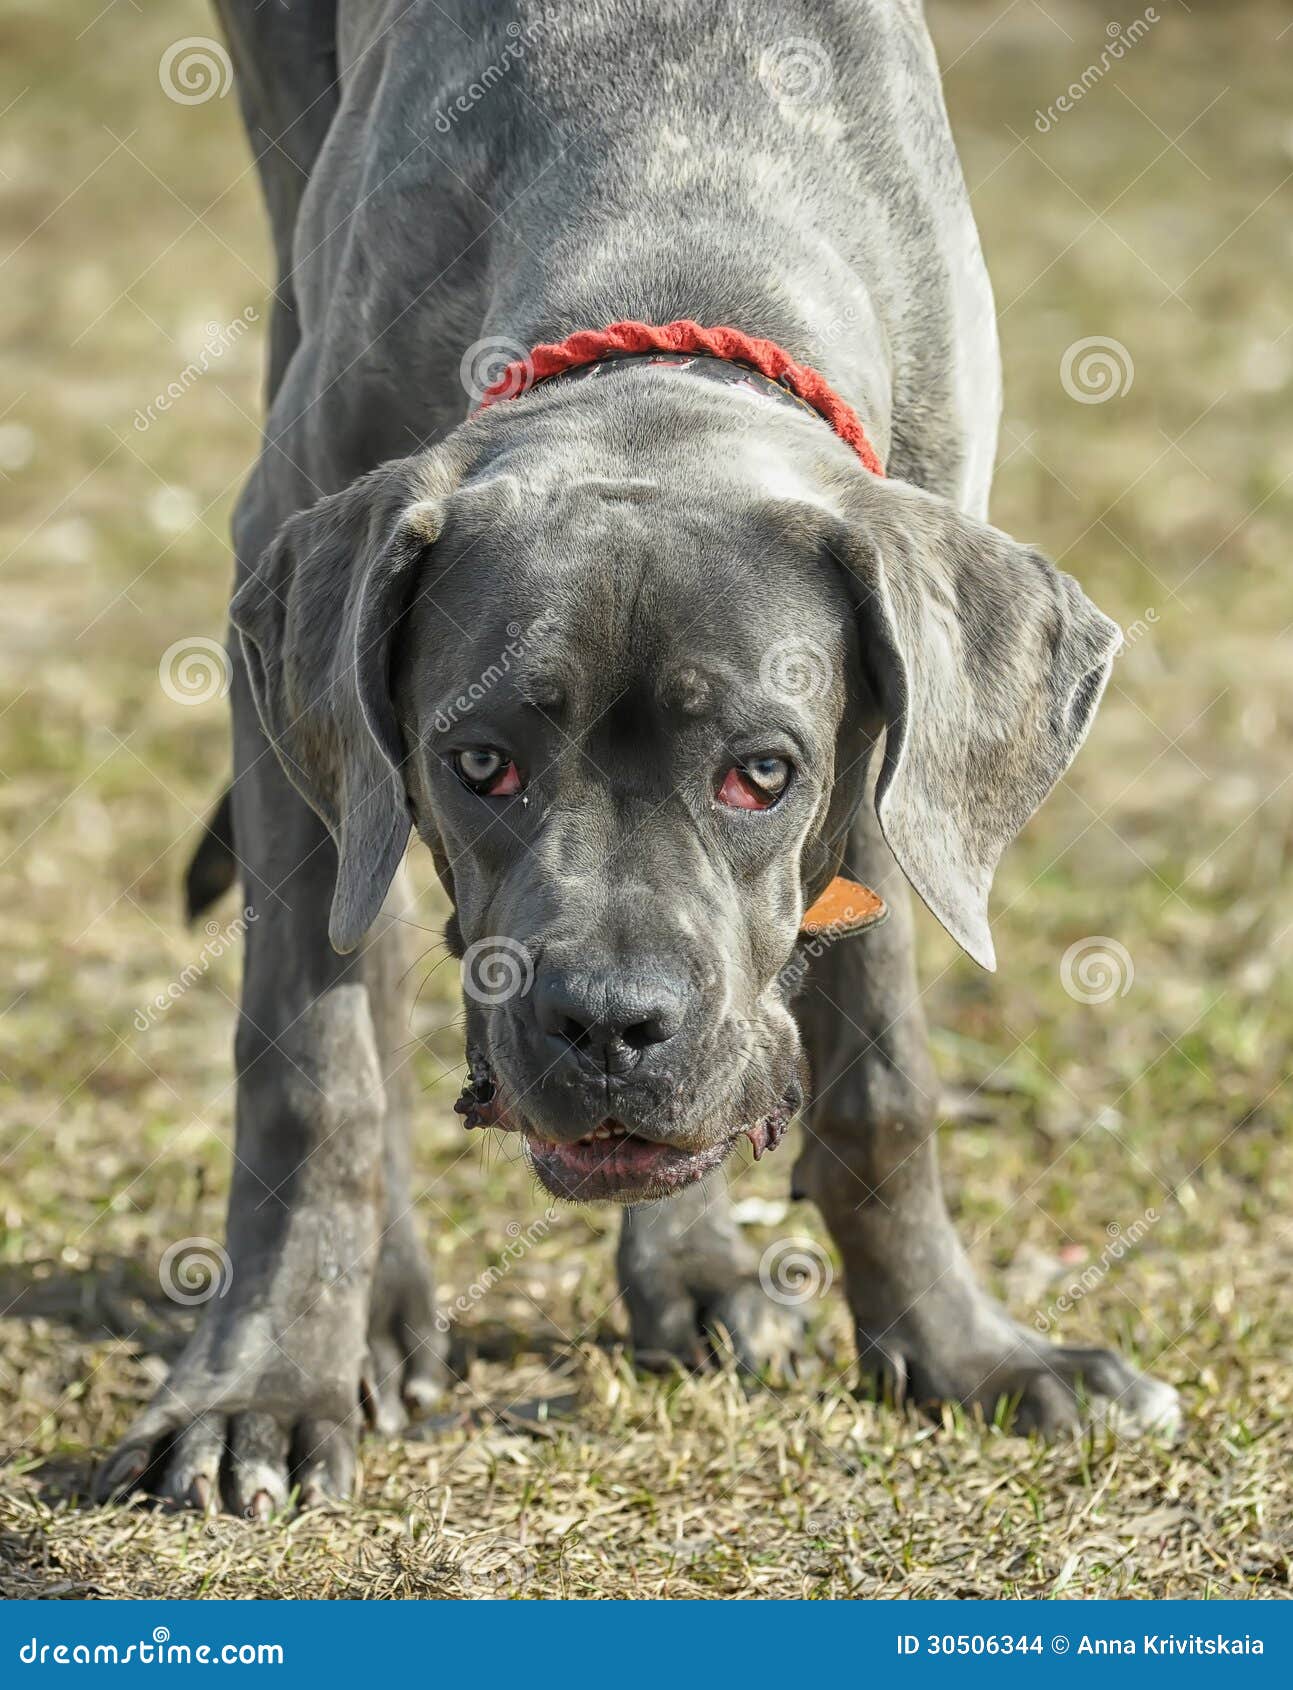 Cane corso puppy stock photo. Image of grey, guard, friend